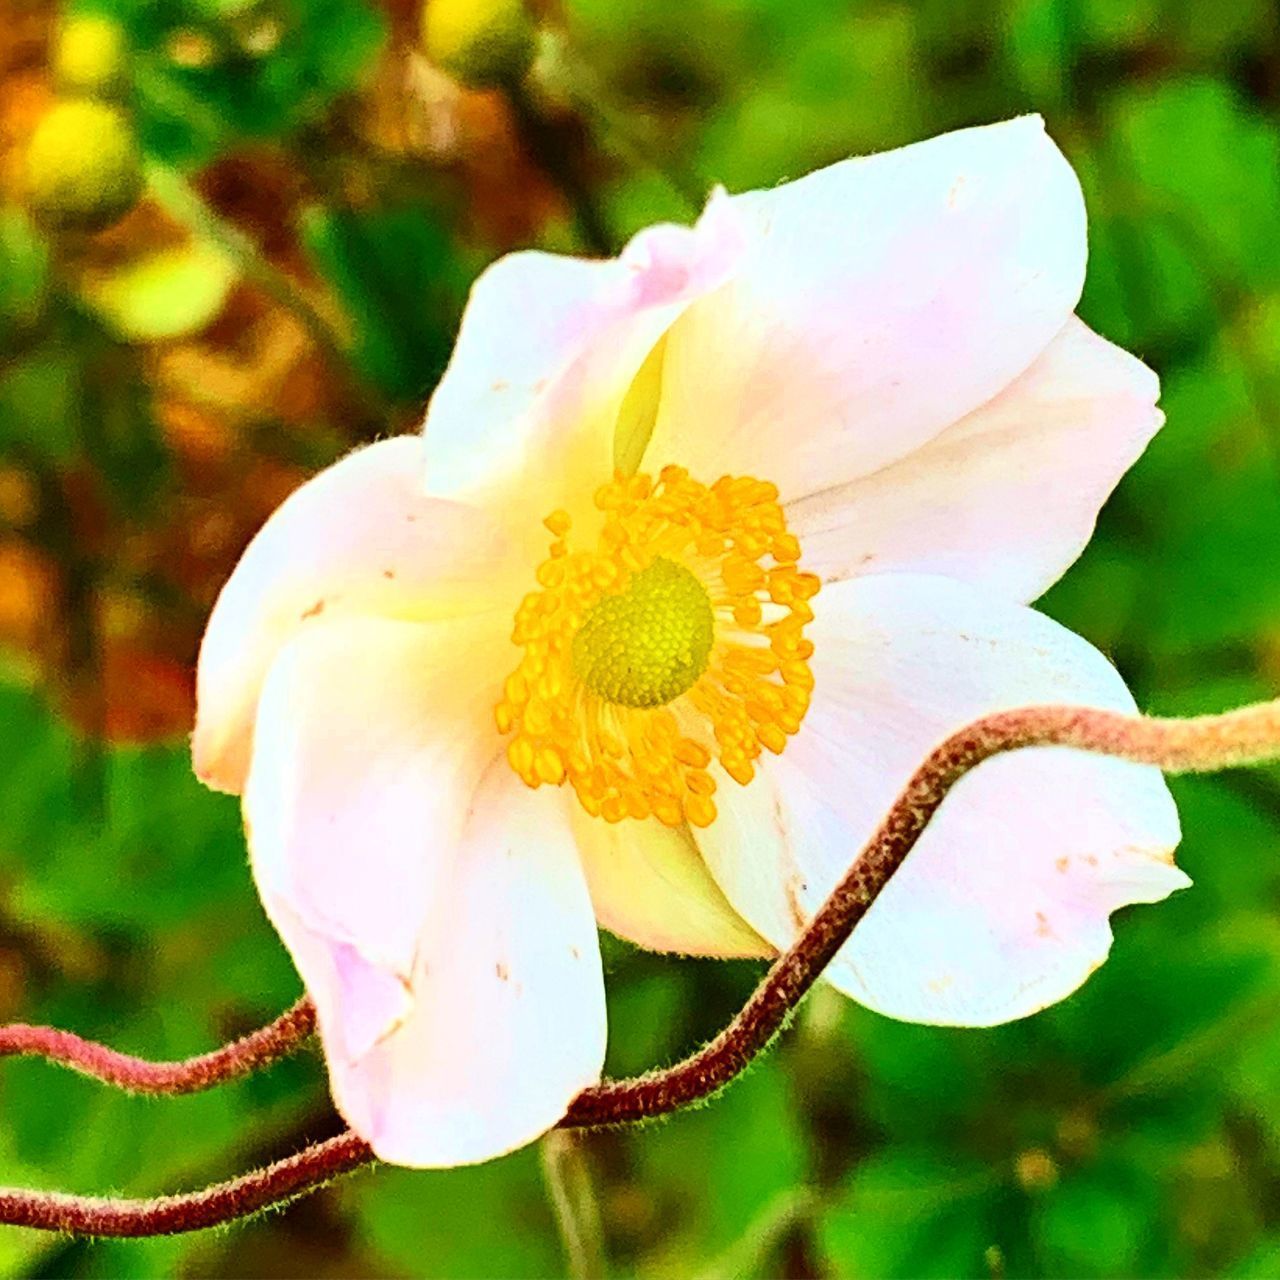 CLOSE-UP OF ROSE FLOWER